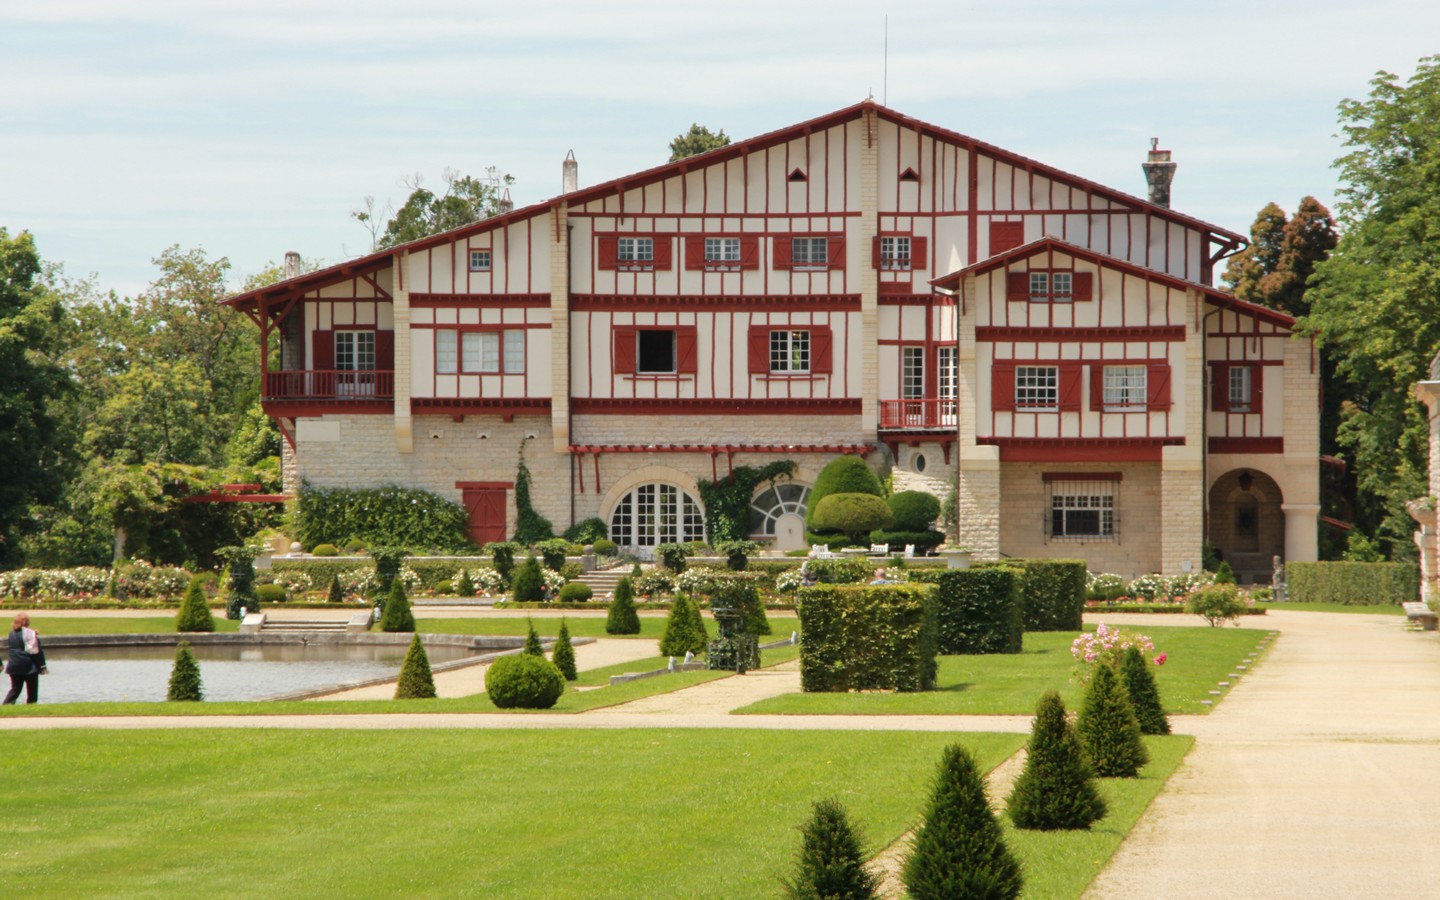 La Villa Arnaga, Une Demeure d'exception